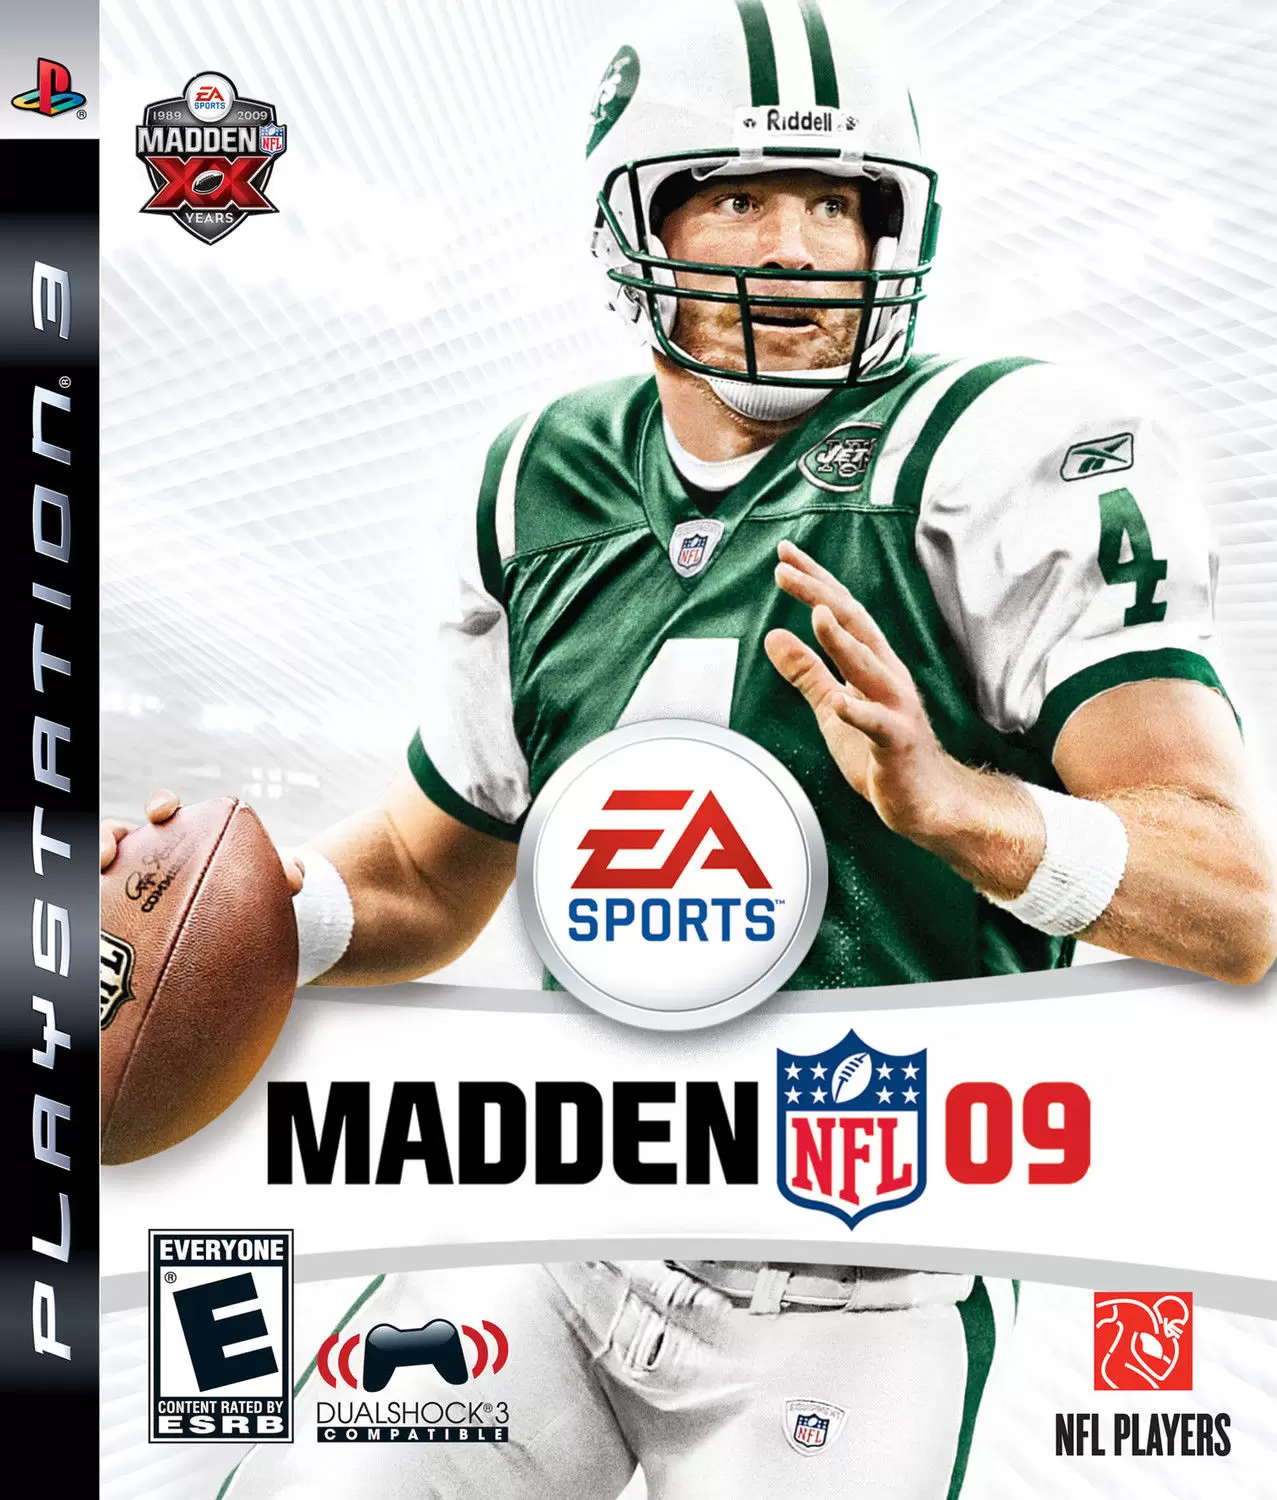 PS3 Games - Madden NFL 09